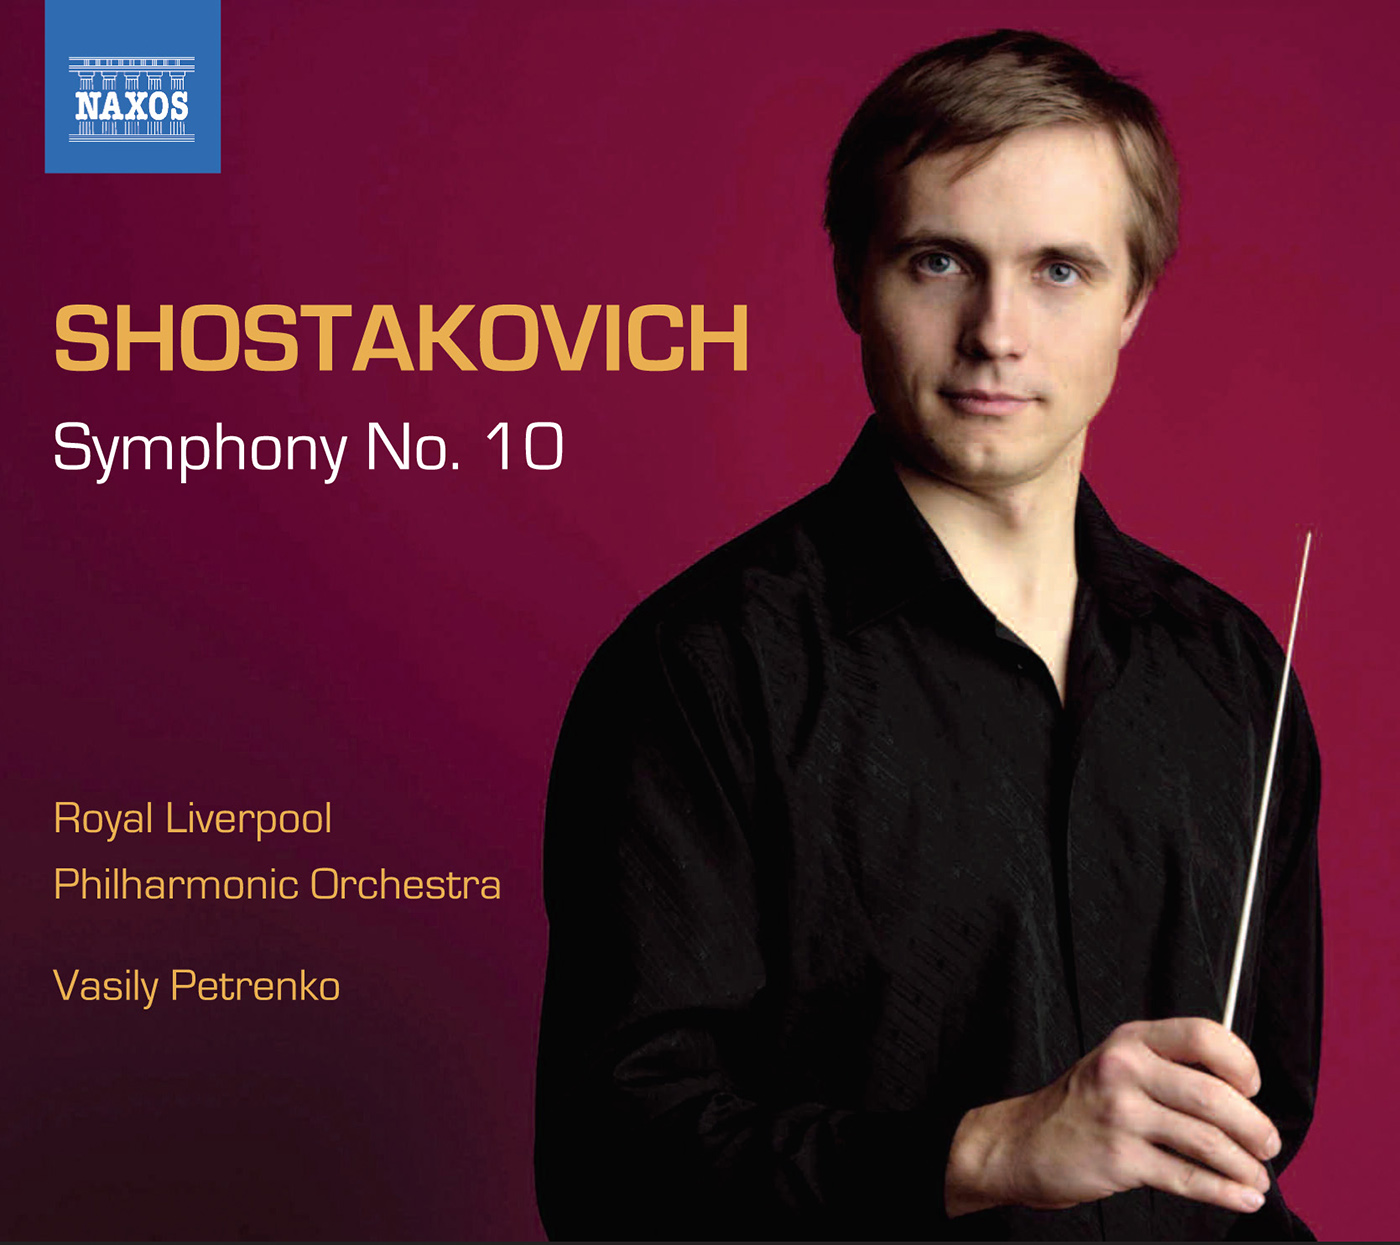 SHOSTAKOVICH, D.: Symphonies, Vol.  4 - Symphony No. 10 (Royal Liverpool Philharmonic, V. Petrenko)